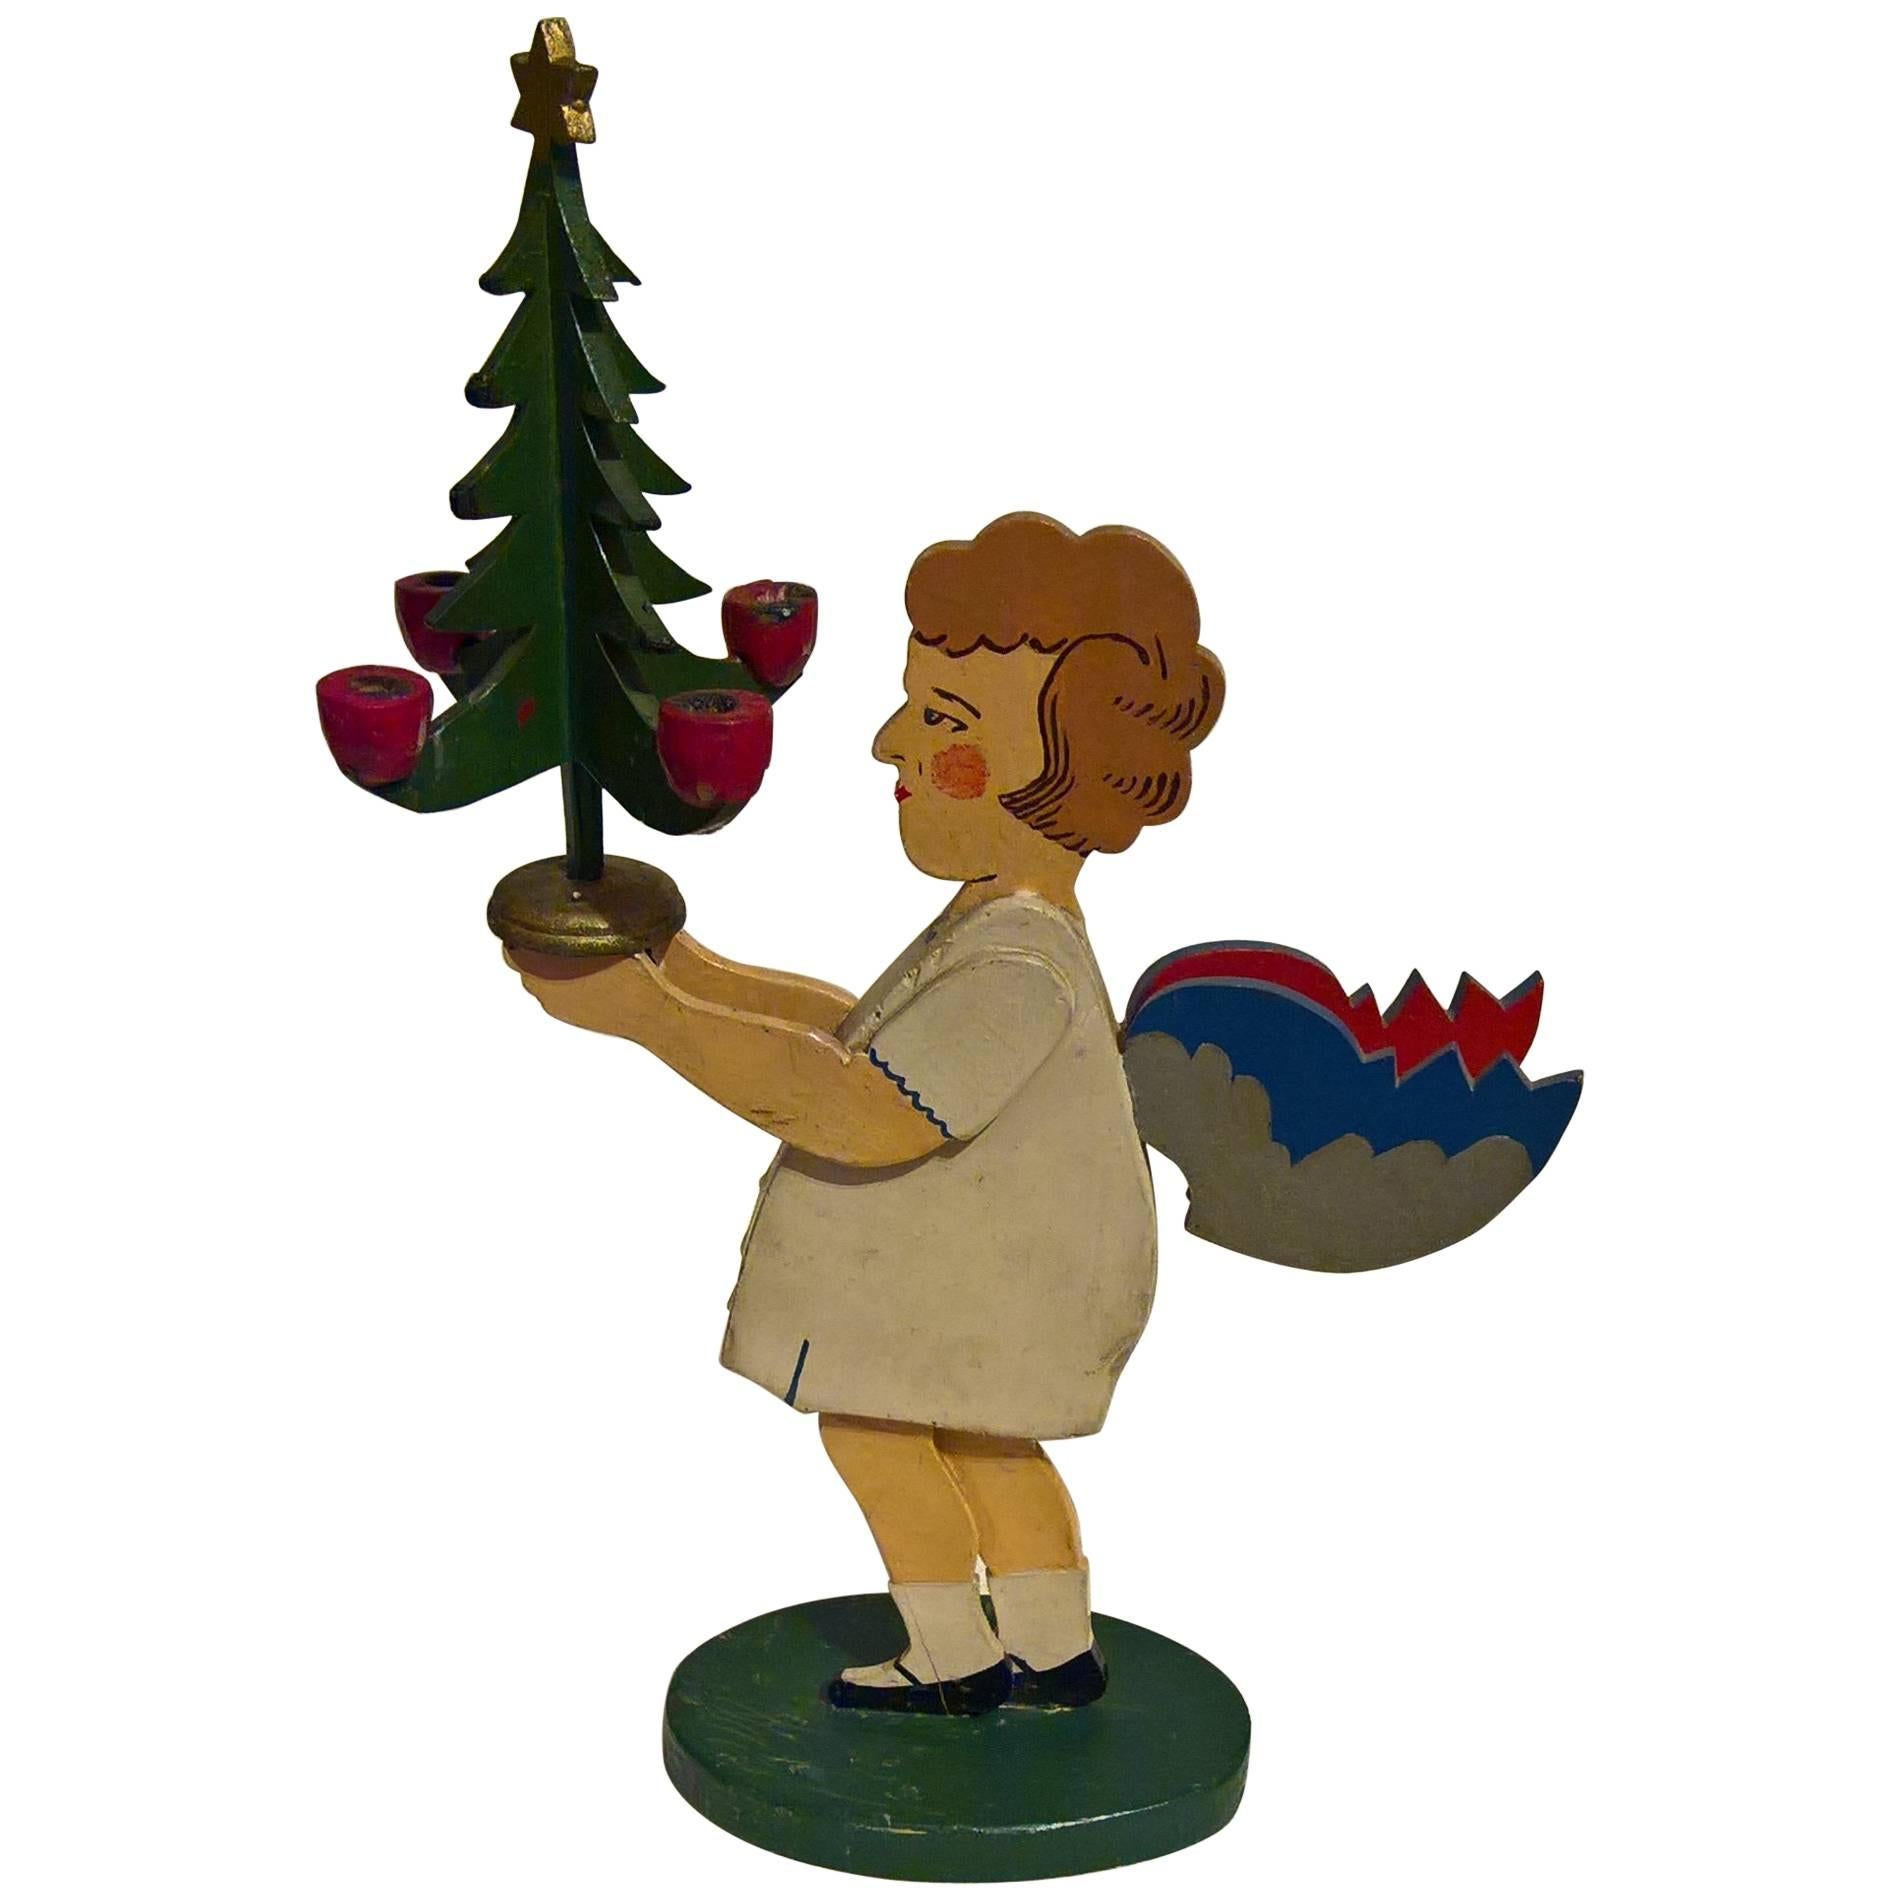 Mid-20th Century Christmas Angel Figure from Erzgebirge